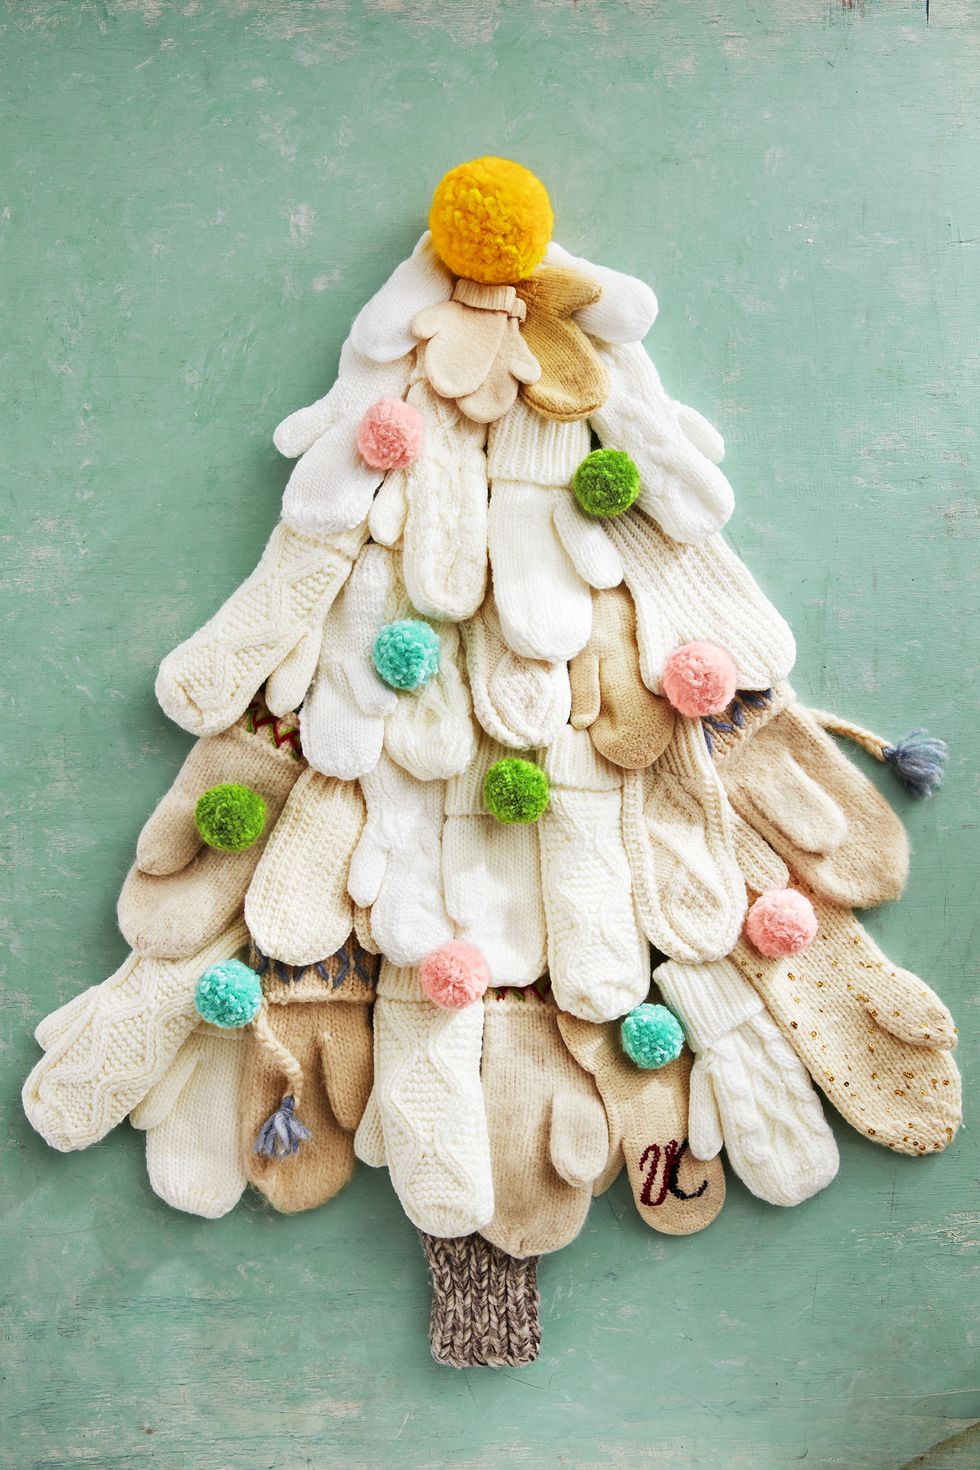 wool mittens hung like a christmas tree